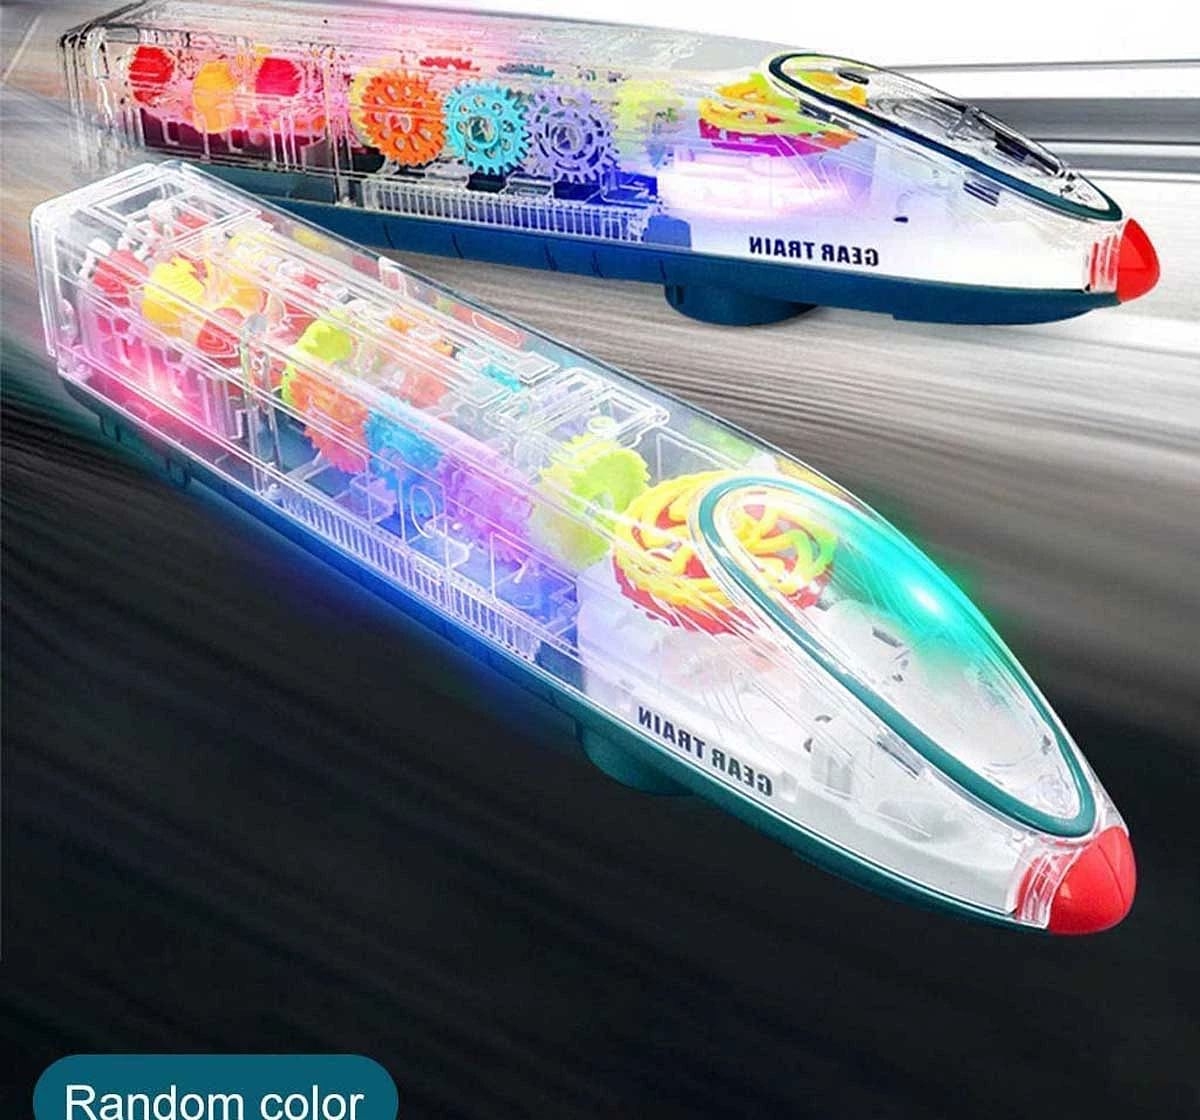 Rowan Gear Musical Metro Train Light & Sound Toy for Kids 2Y+, Multicolour